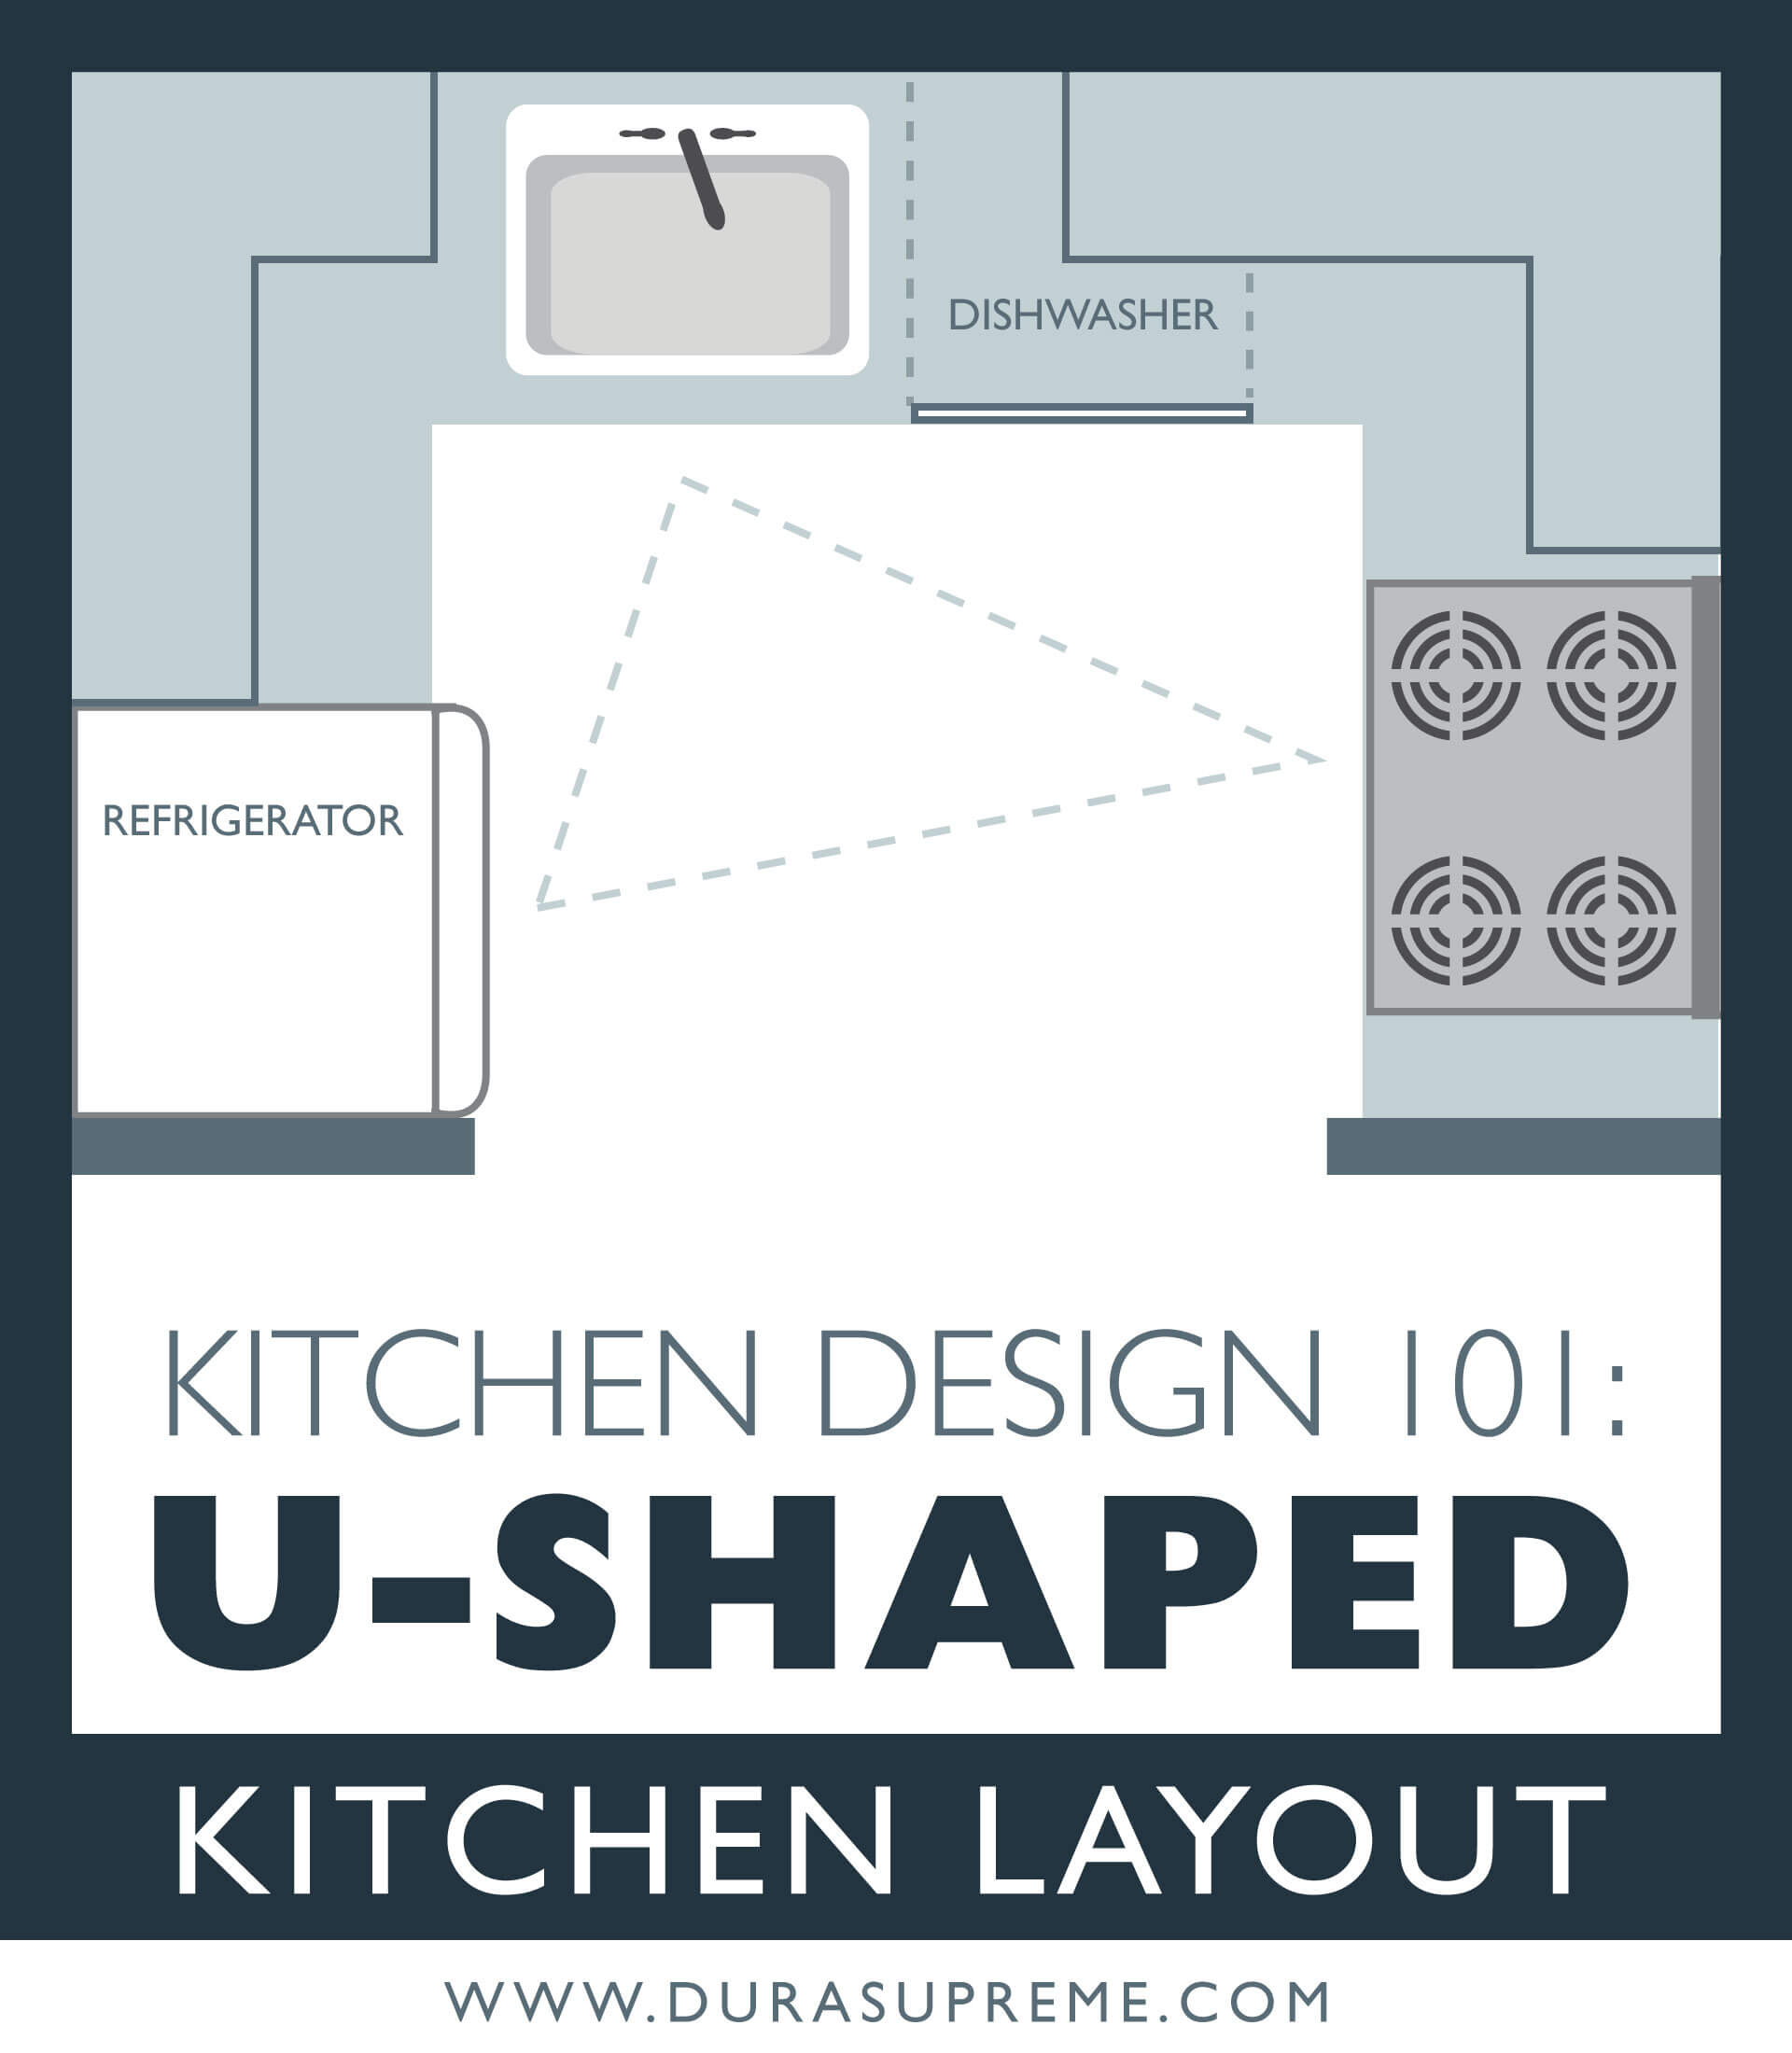 Kitchen Design 101 What Is a UShaped Kitchen Design? Dura Supreme